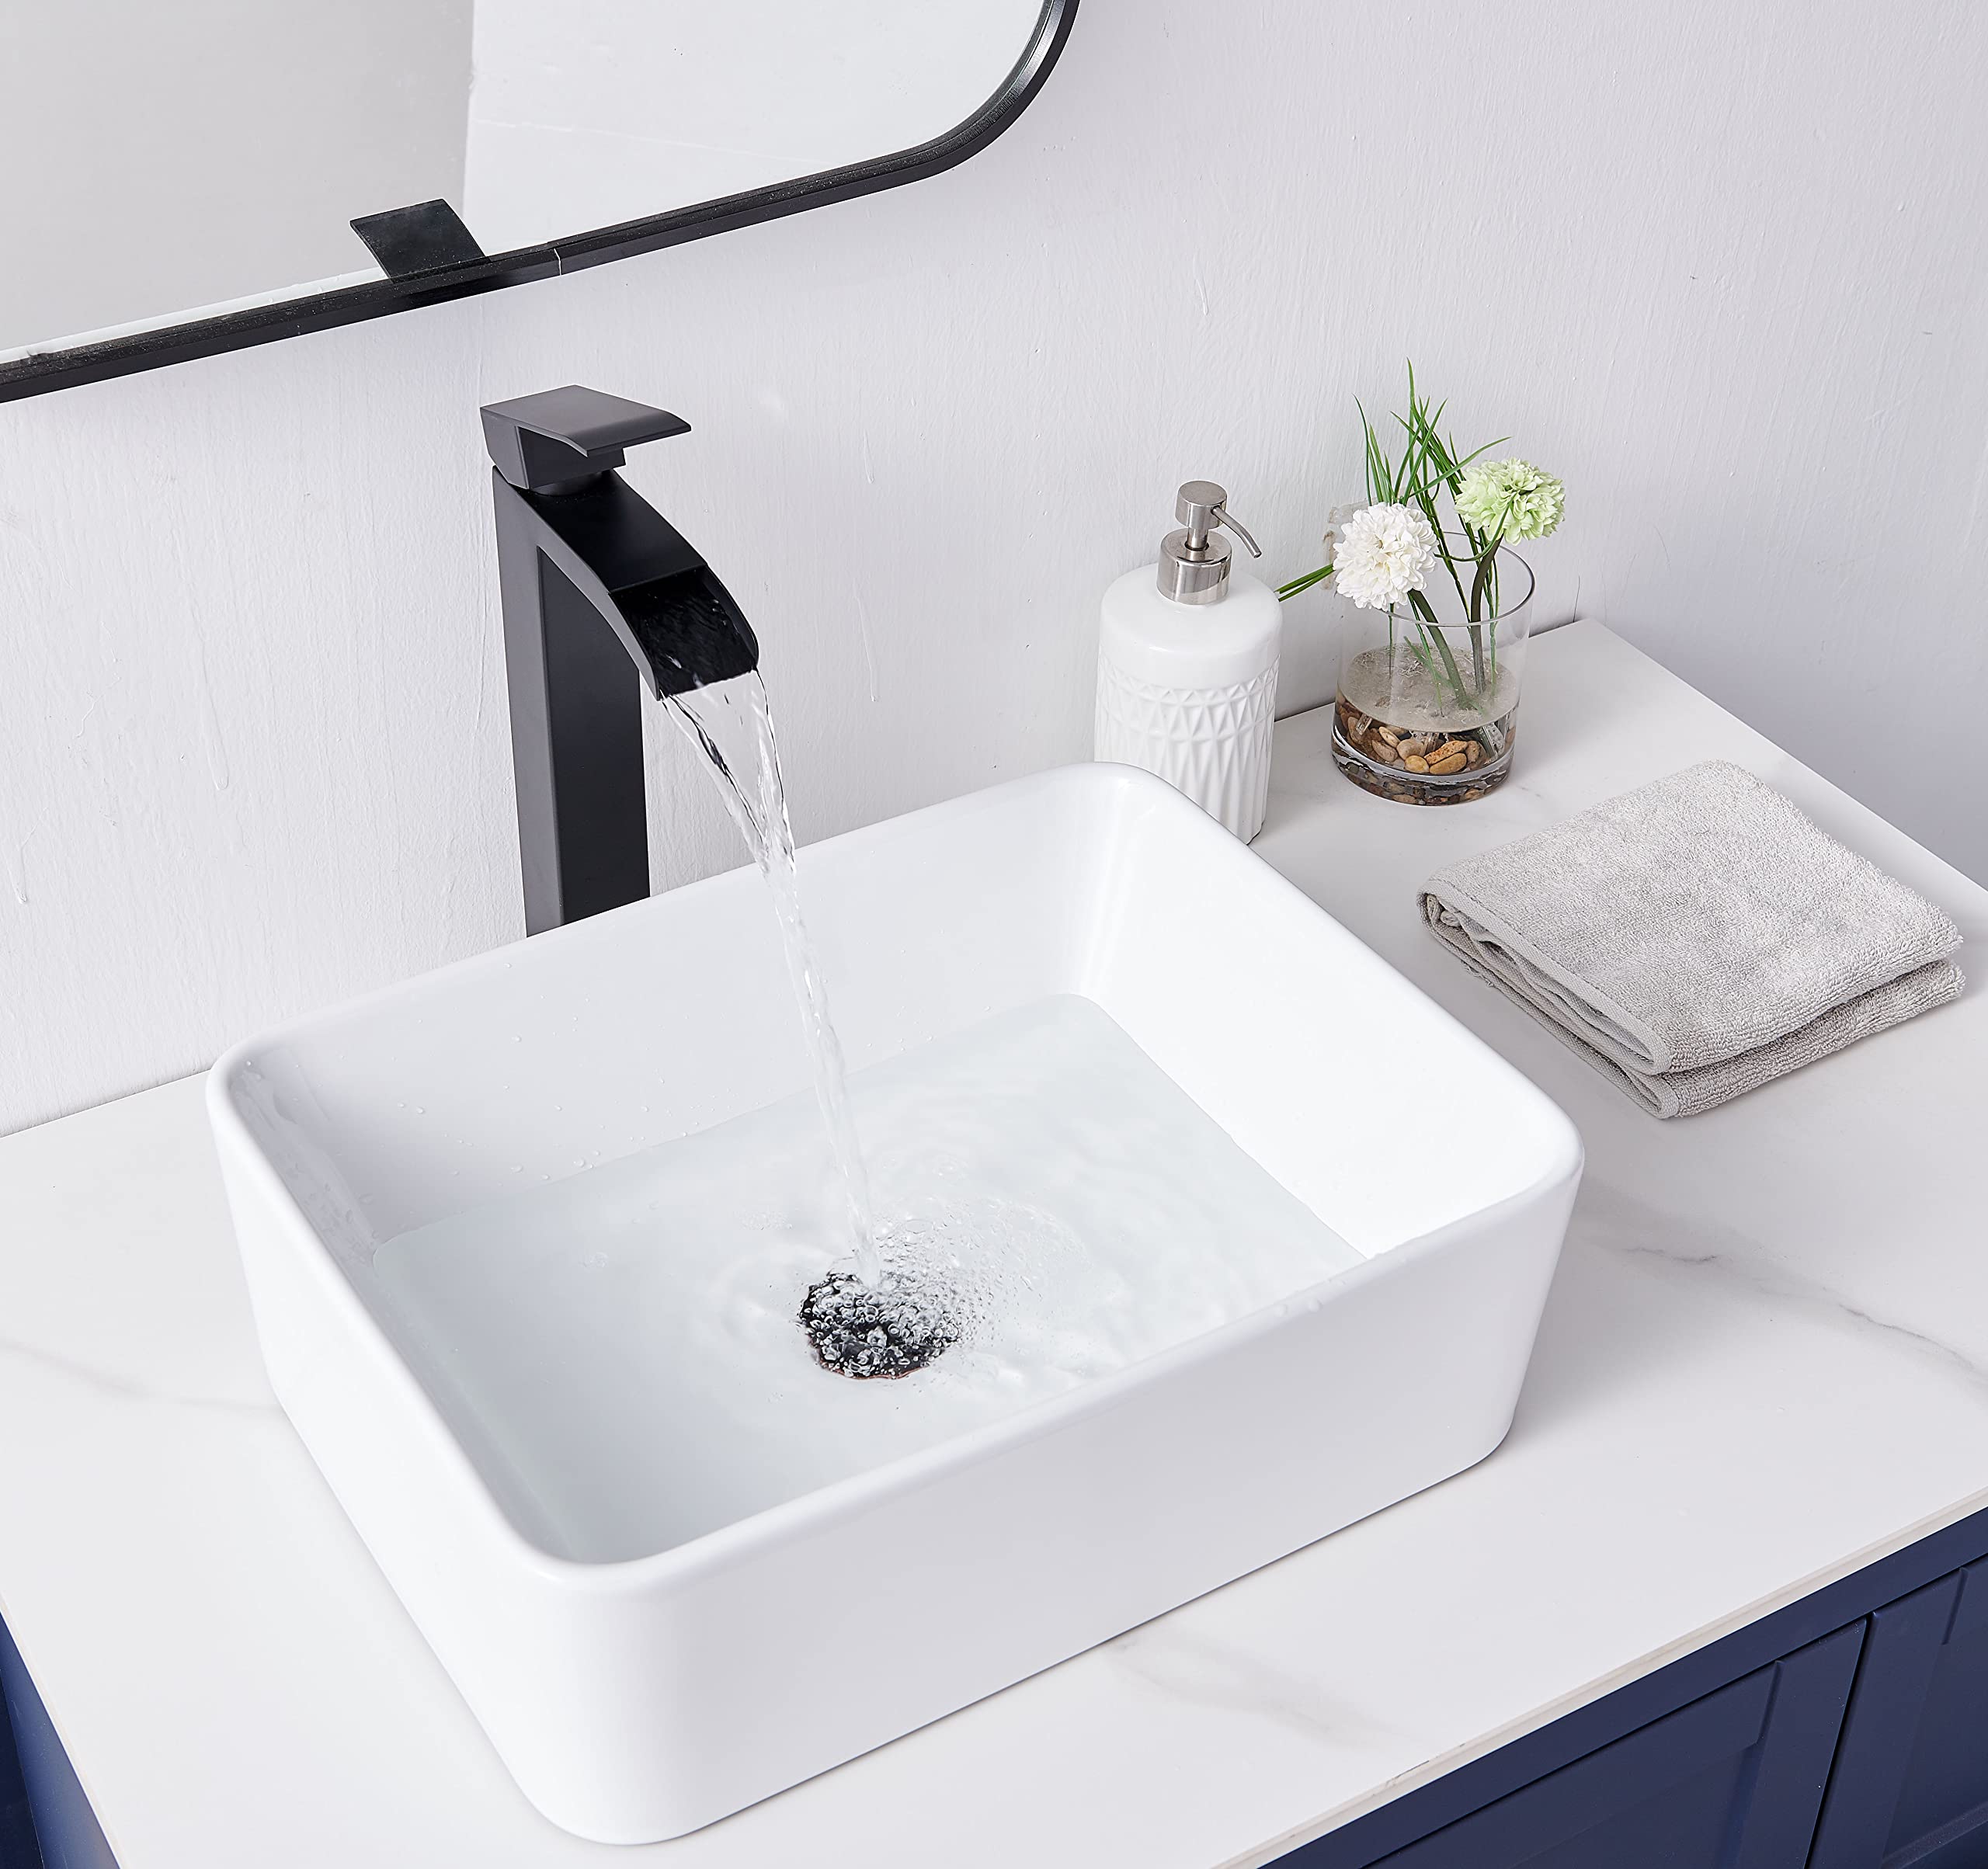 VCCUCINE Rectangular Vessel Sink, 16"X12" Small Bowl Bathroom Vessel Sink, White Ceramic Lavatory Above Counter Art Basin Vanity Sink